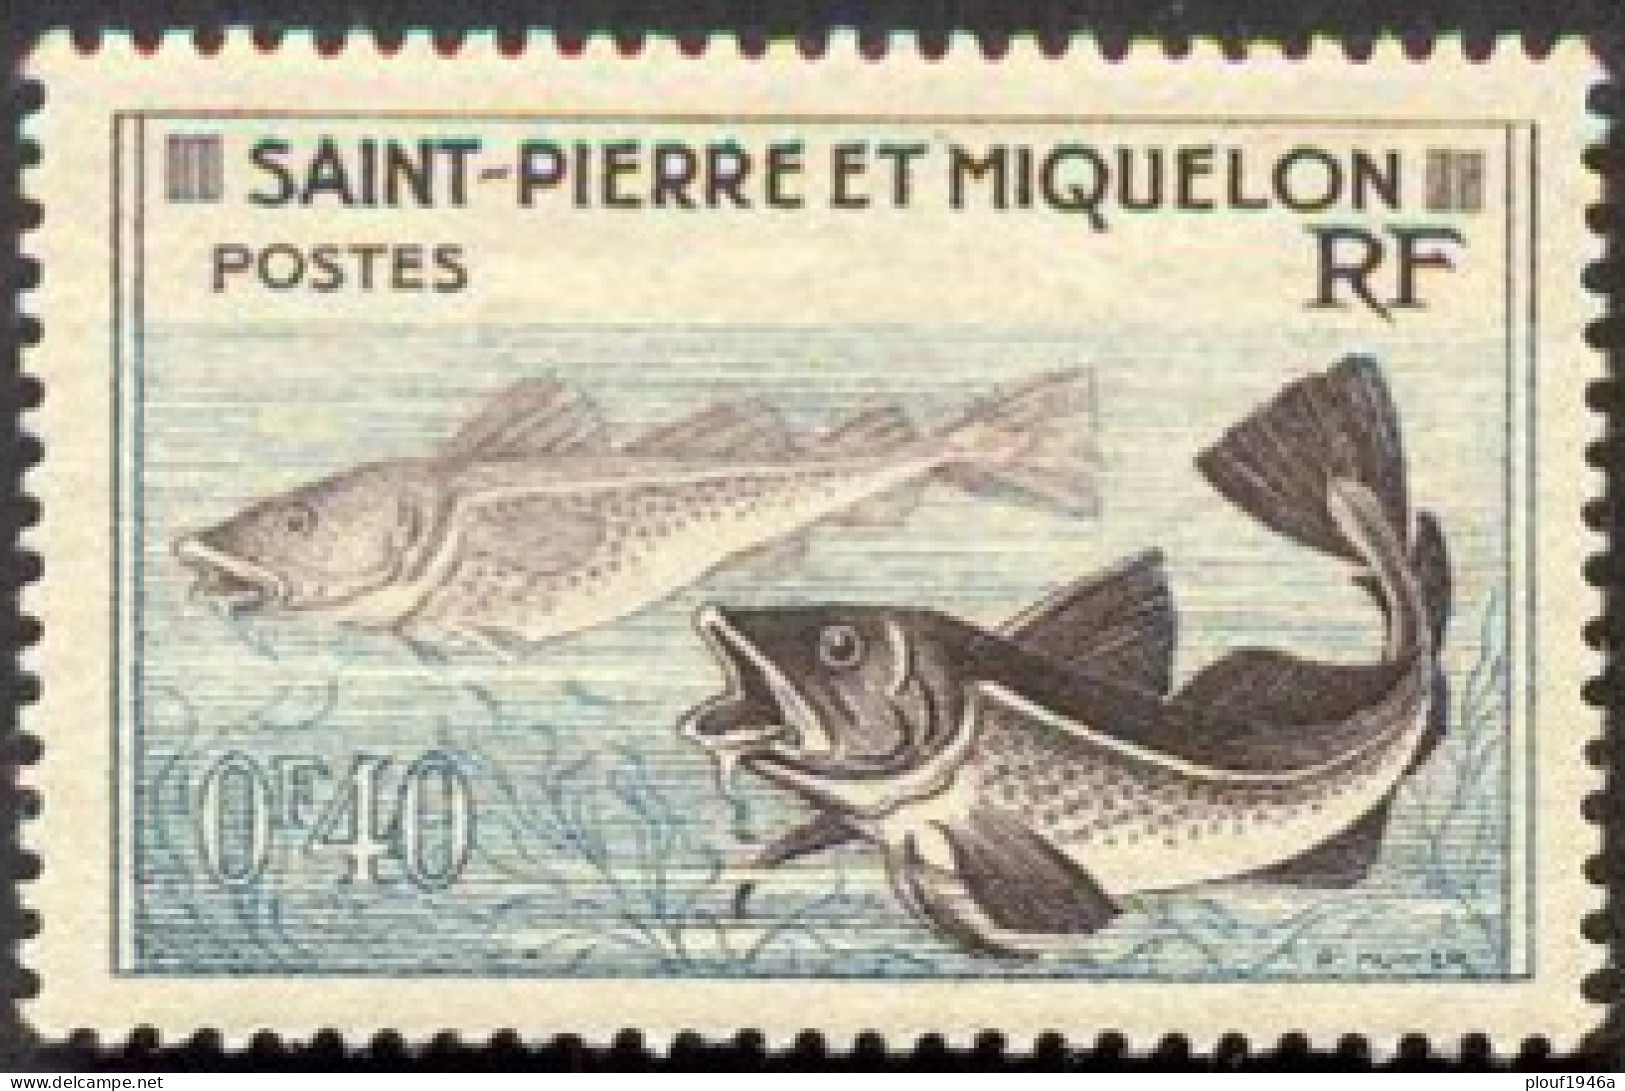 Pays : 422 (Saint-Pierre & Miquelon : Col. Franç.)  Yvert Et Tellier N° :  353 (*) - Ungebraucht